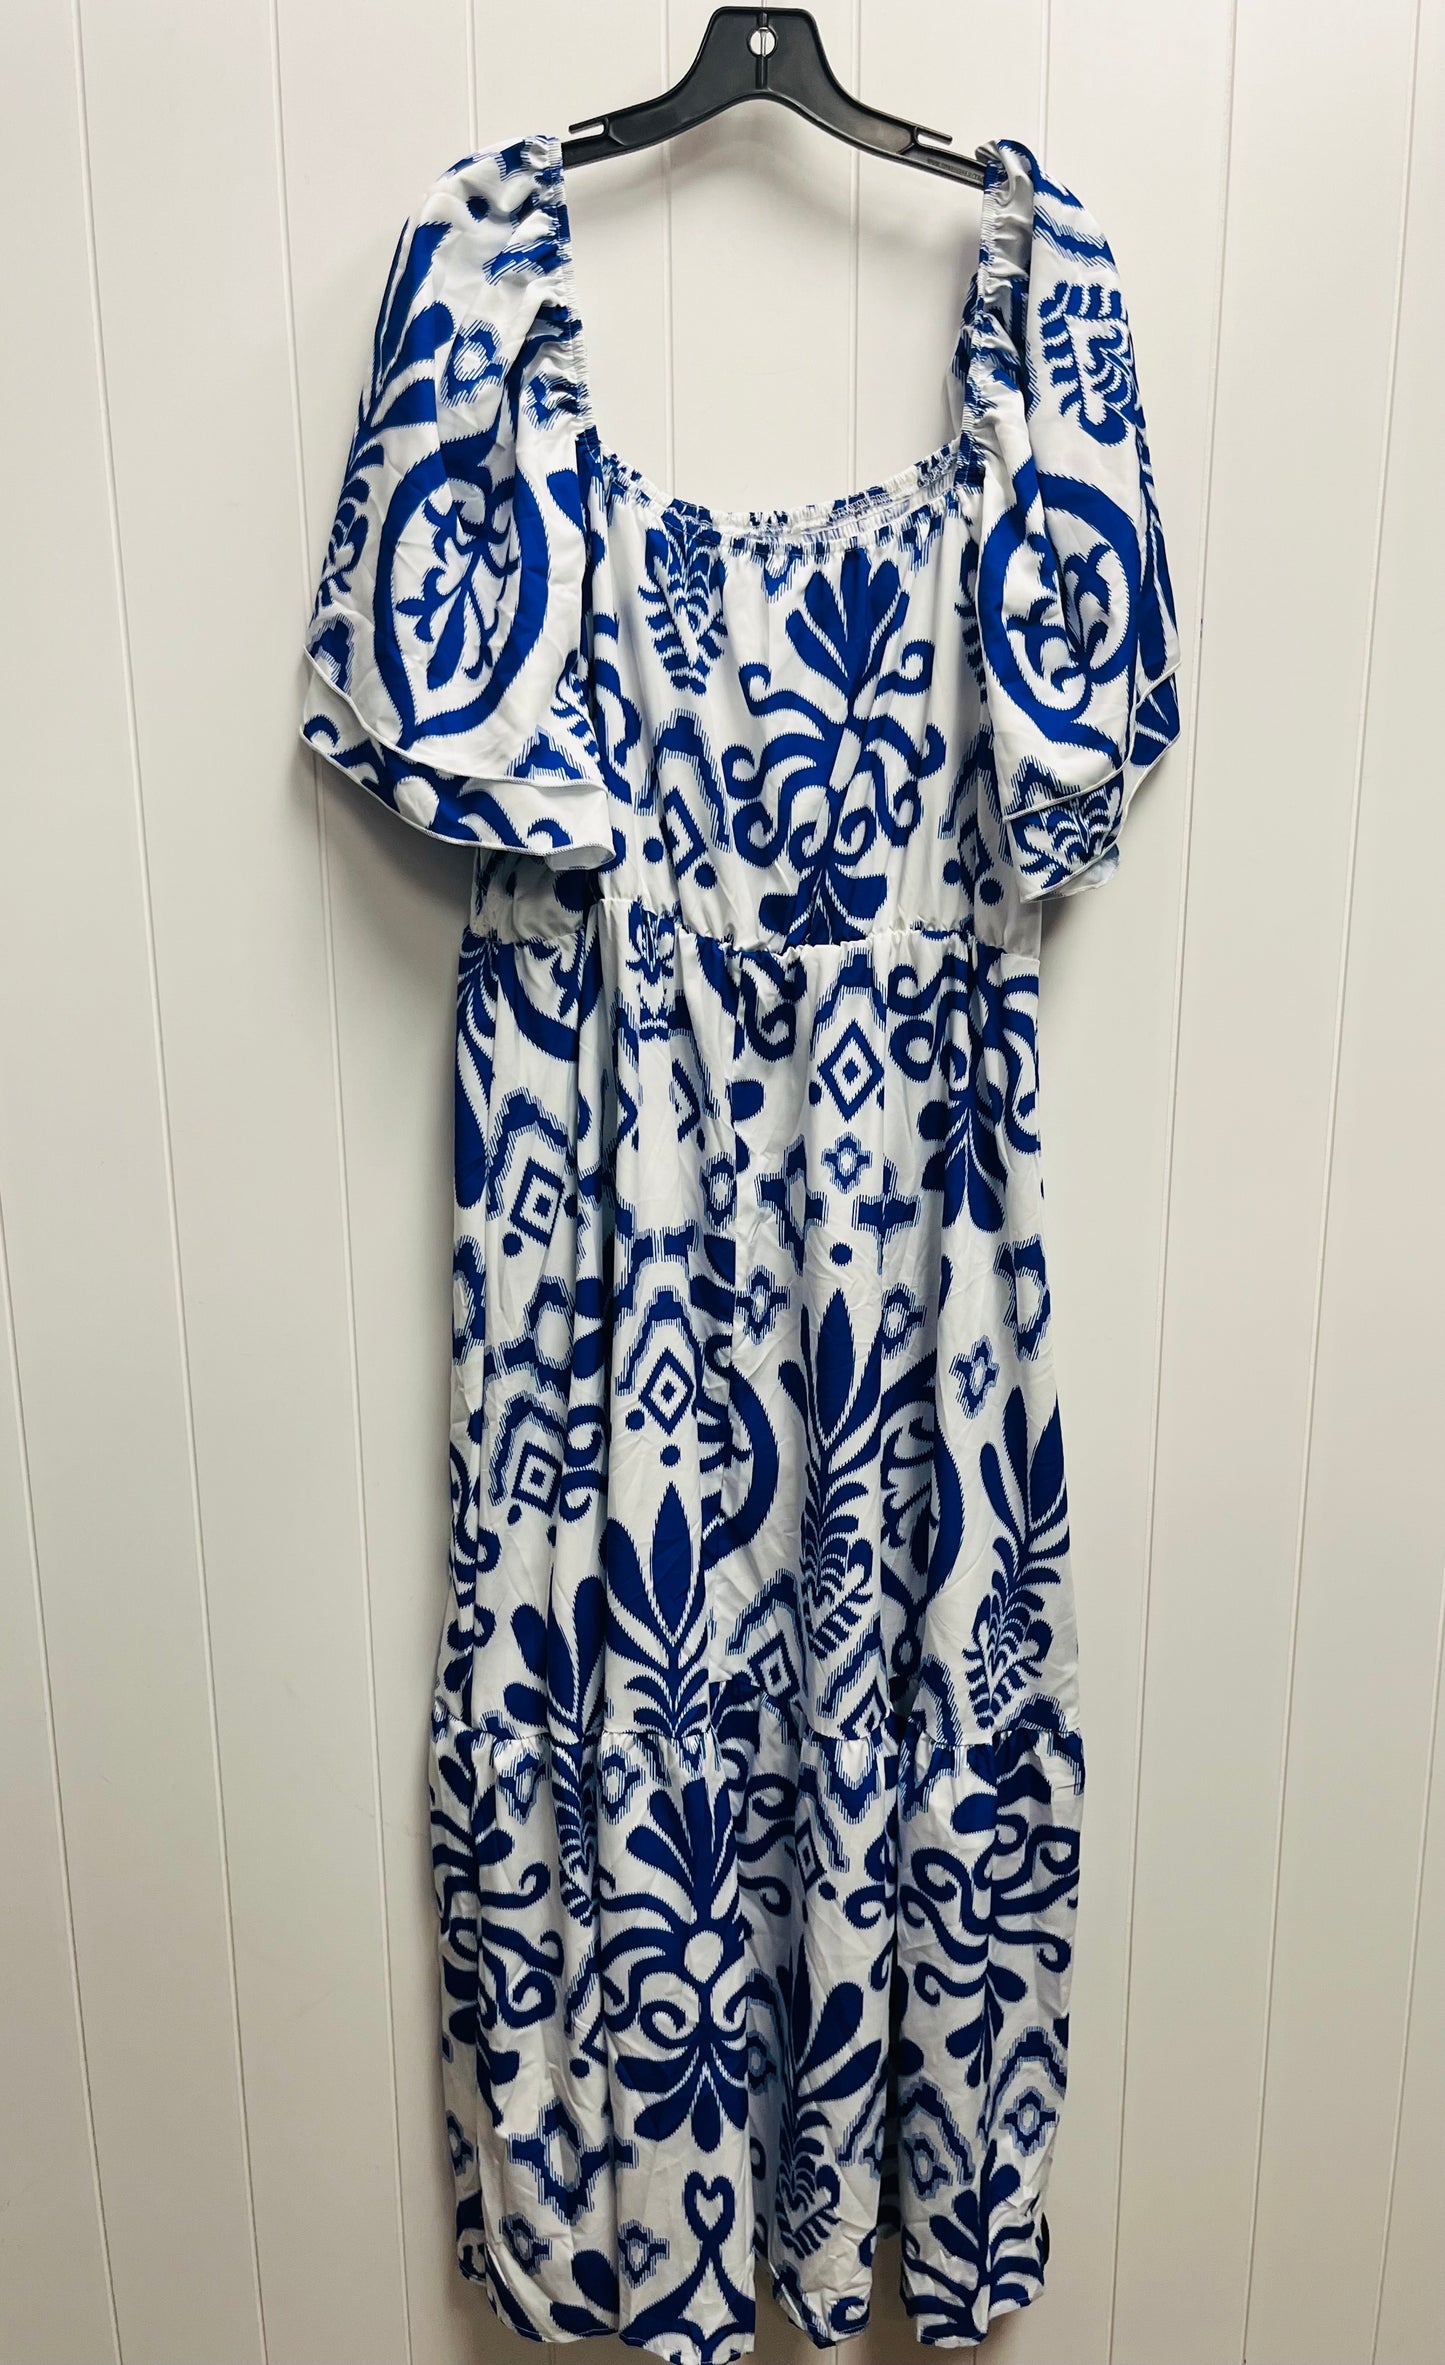 Dress Casual Maxi By Shein  Size: 4x